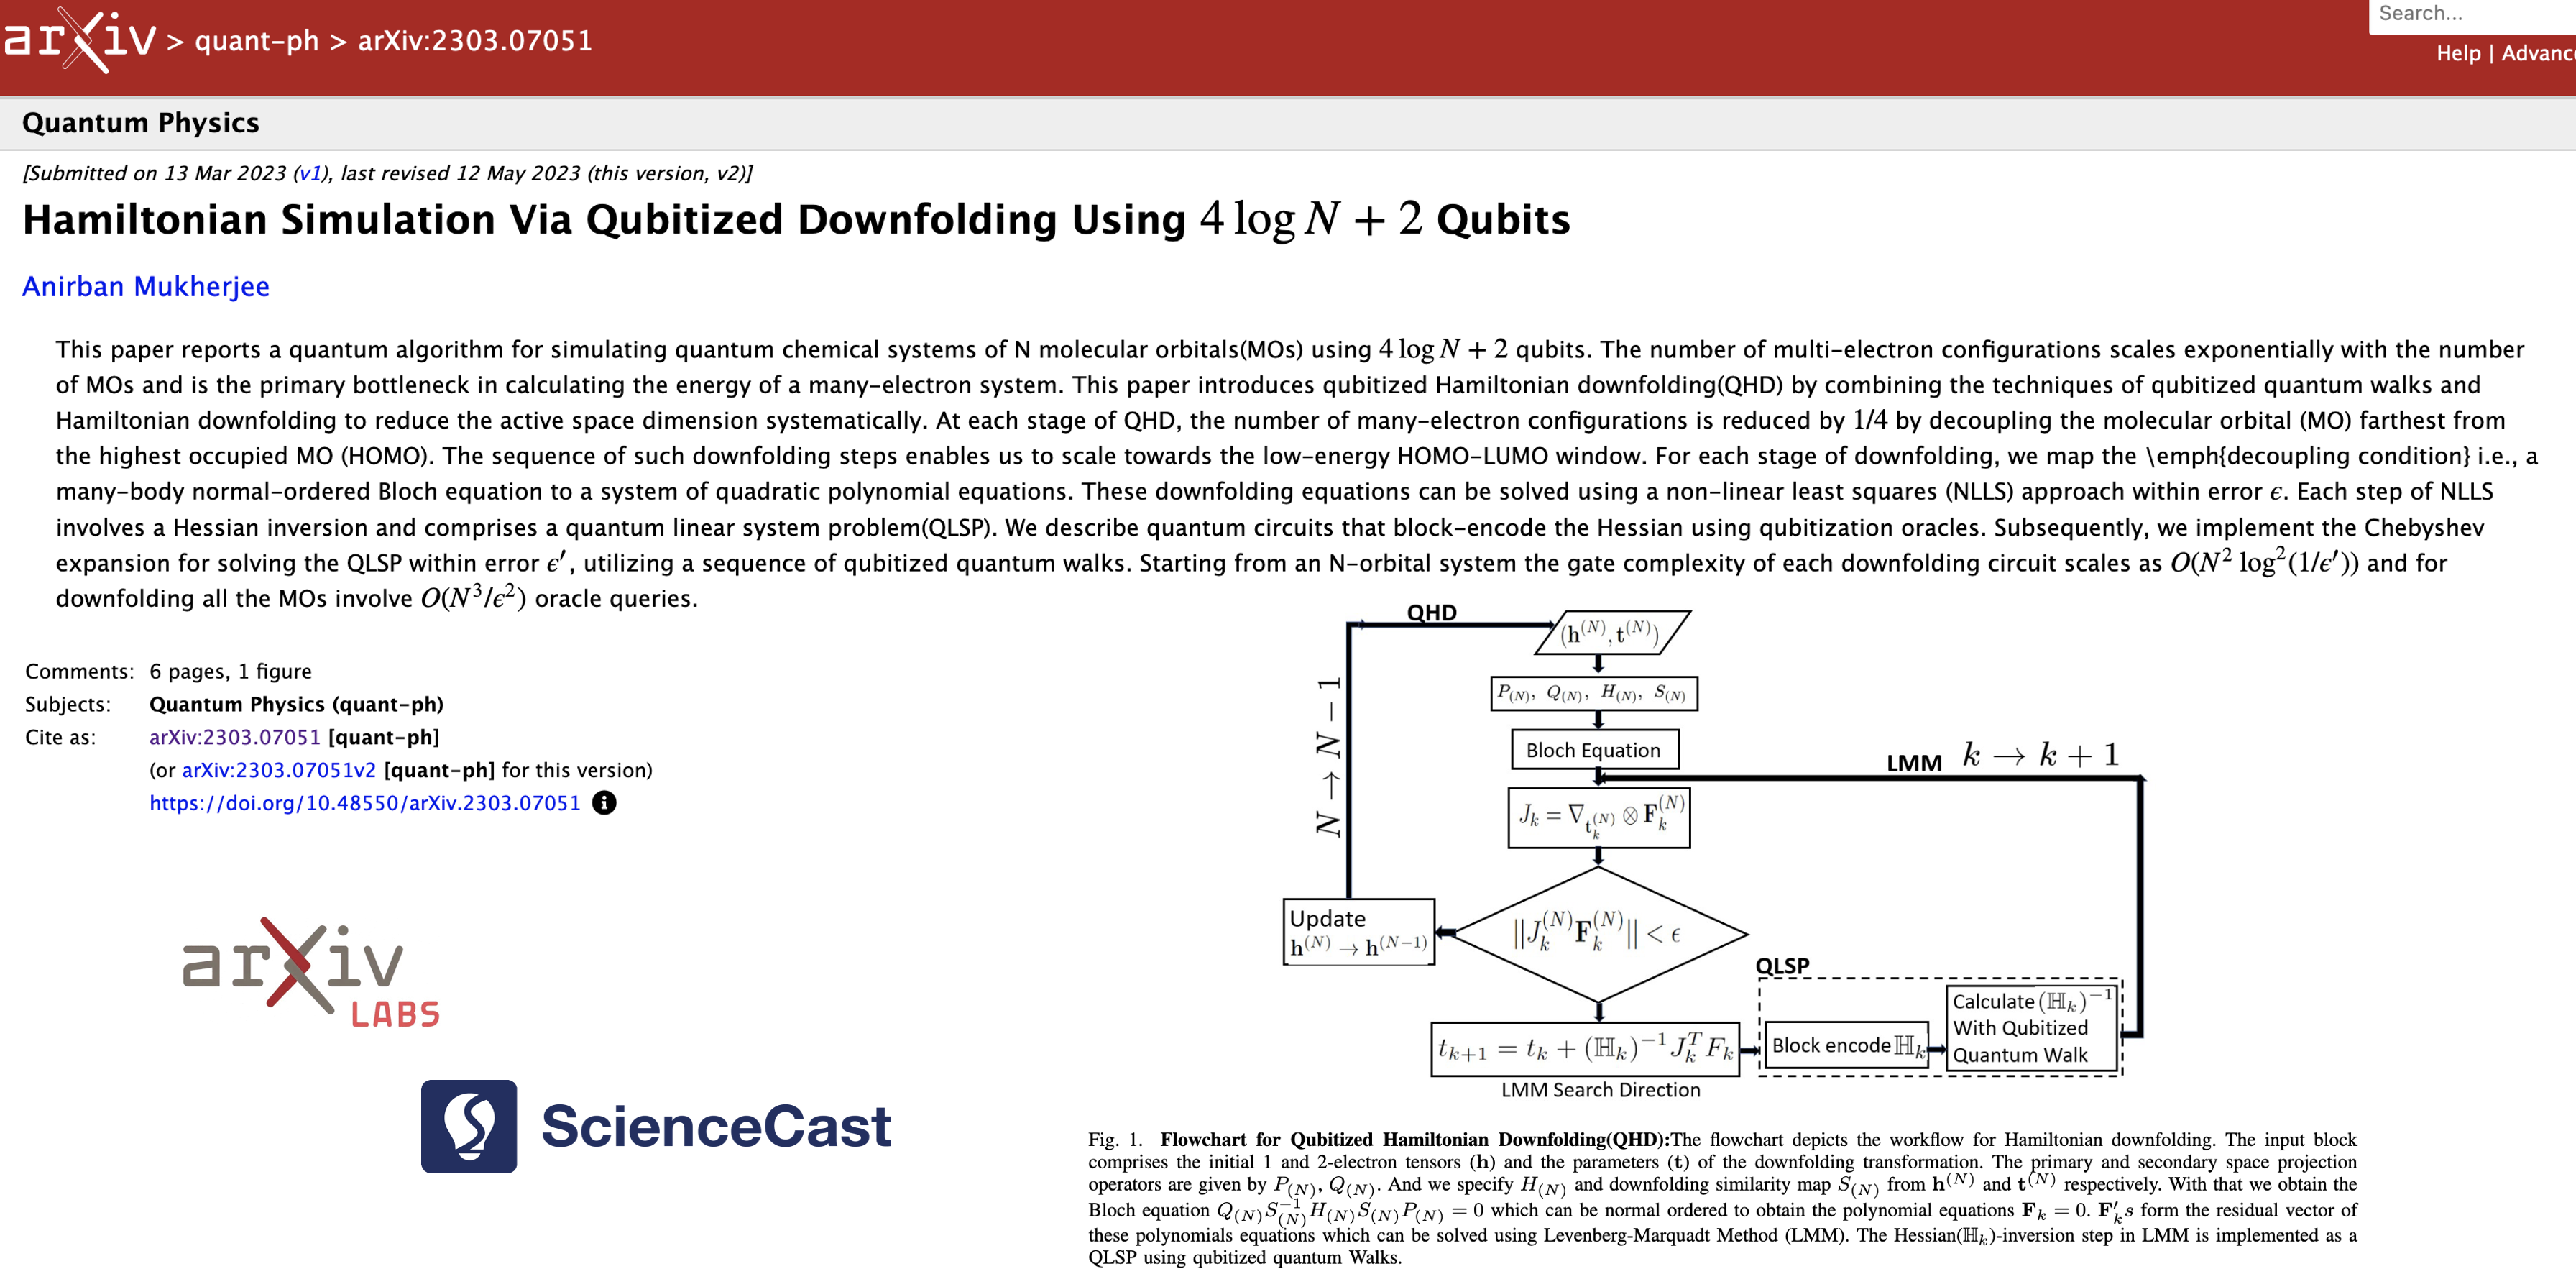 Hamiltonian Simulation Via Qubitized Downfolding Using $4\log N+2$
  Qubits